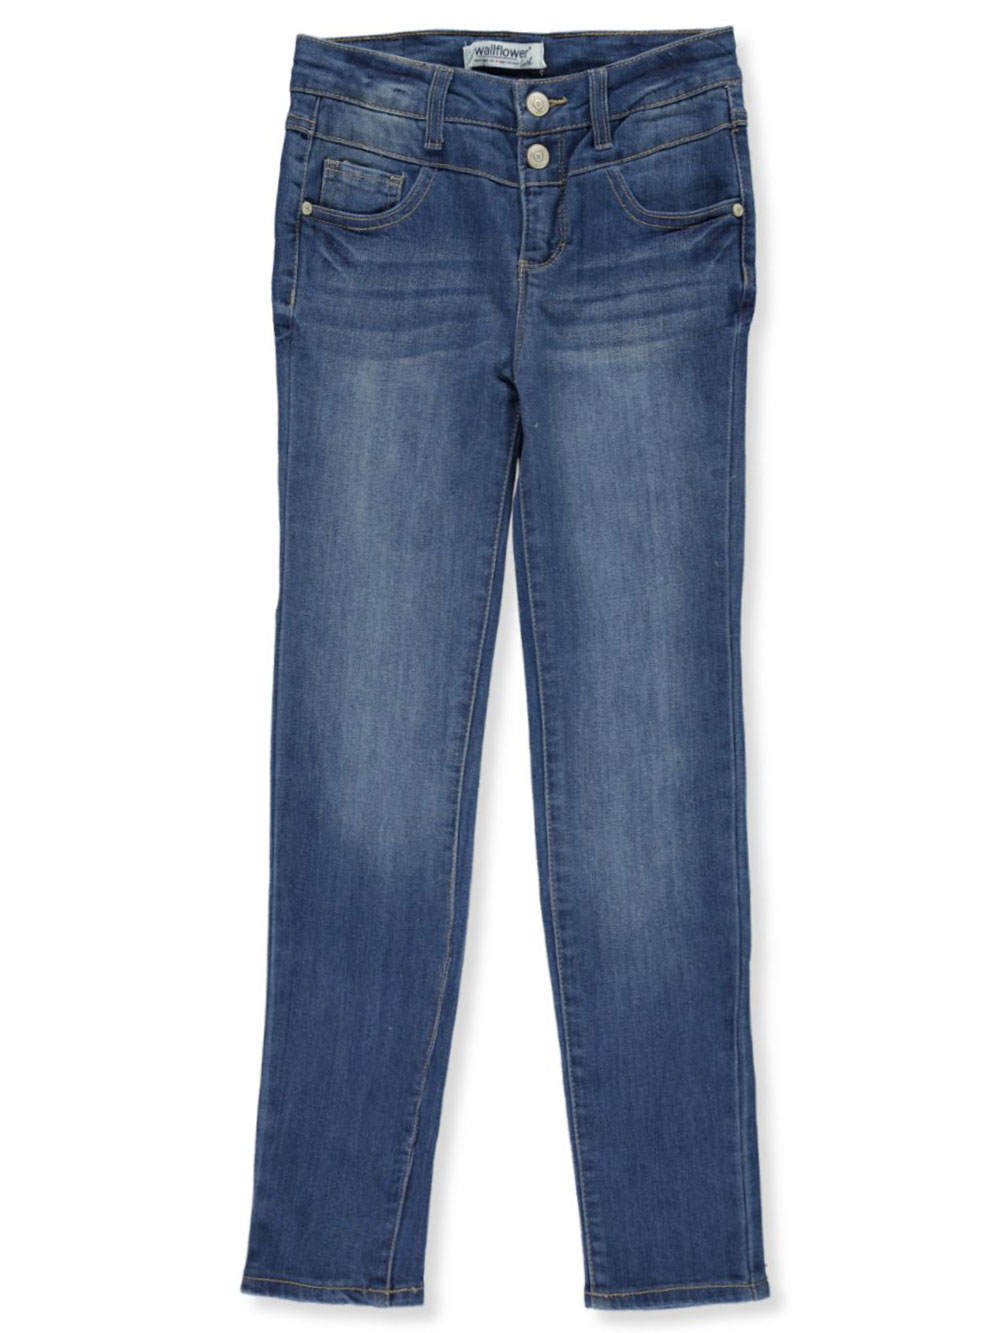 wallflower high waisted jeans